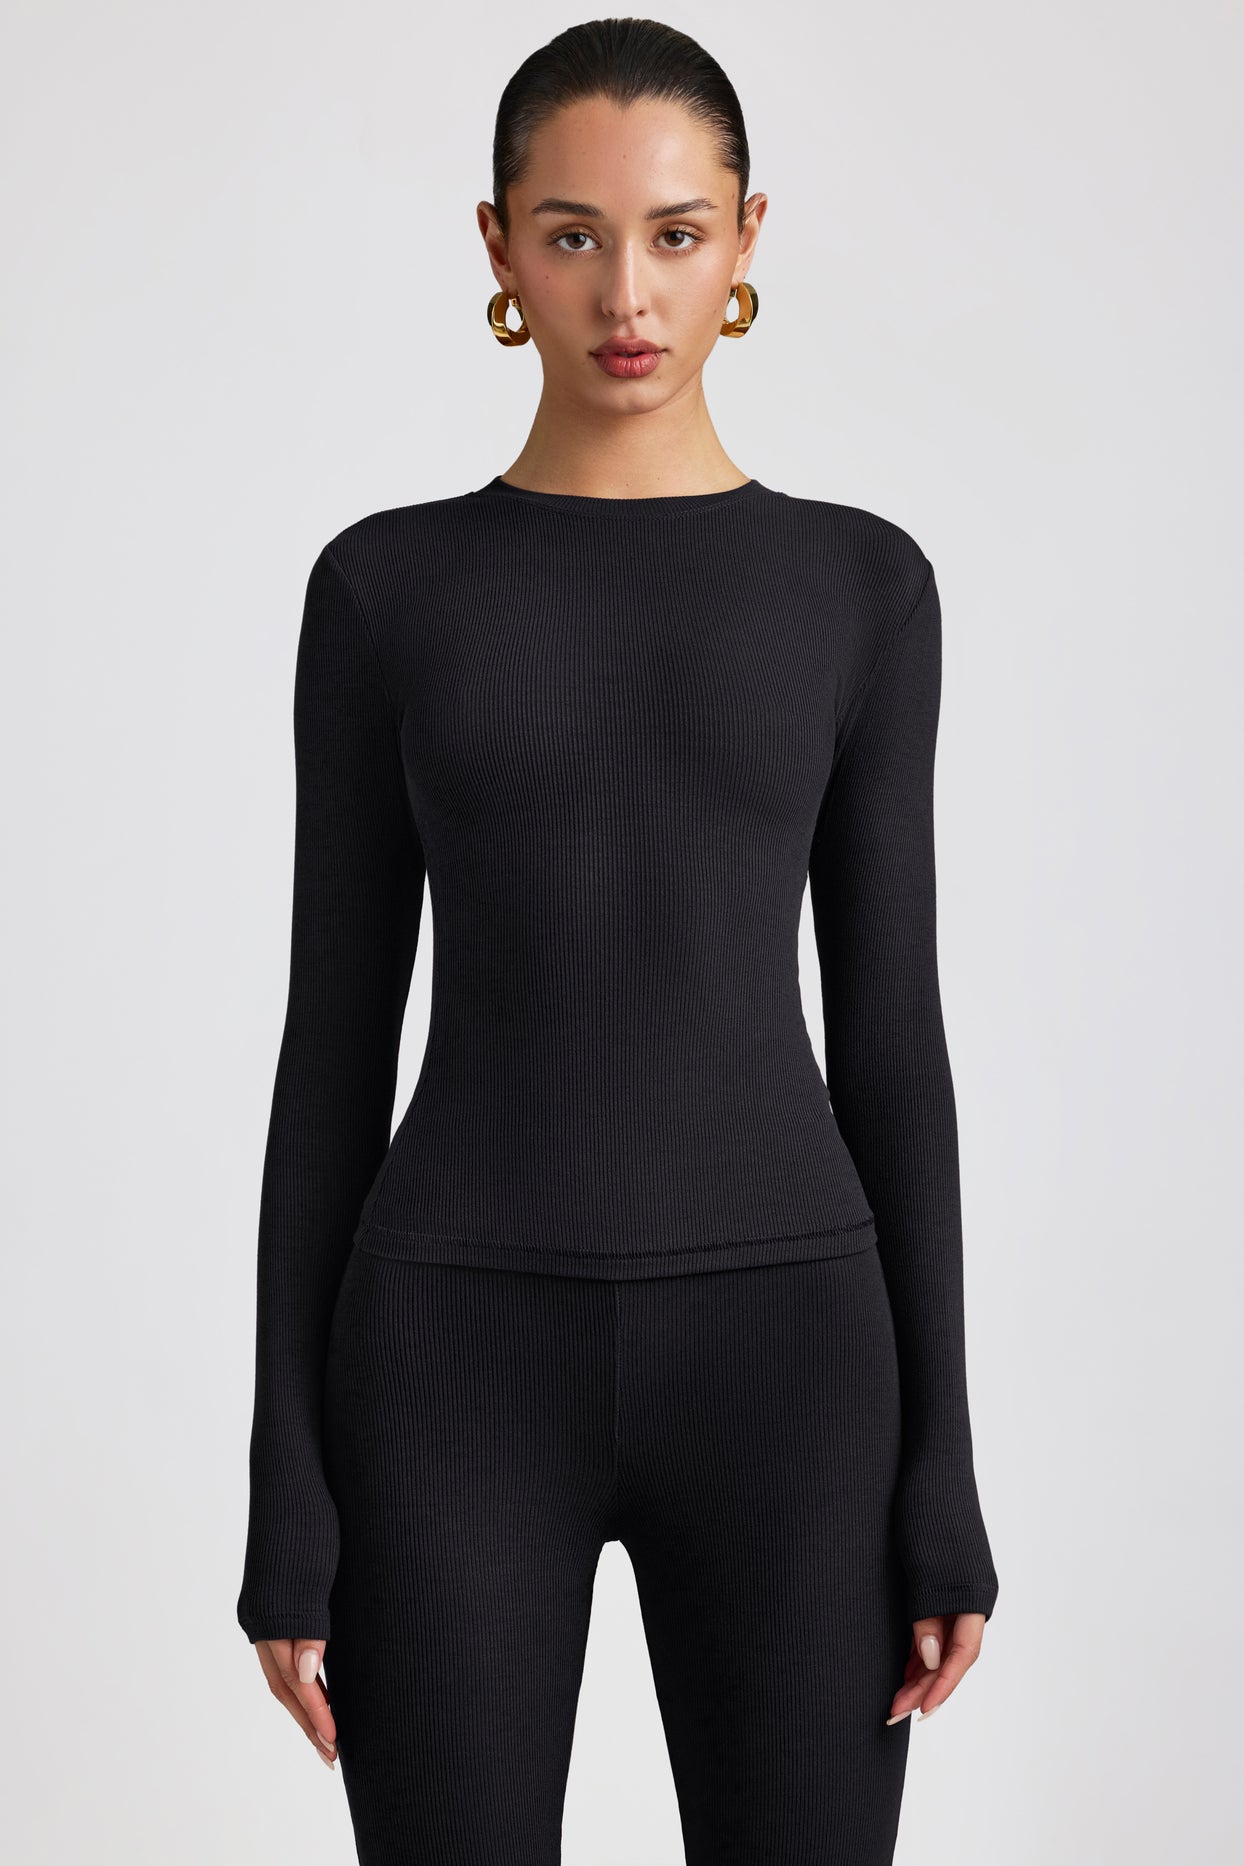 CLiO Women's Shaping Bodysuit - Black - Size 10-12